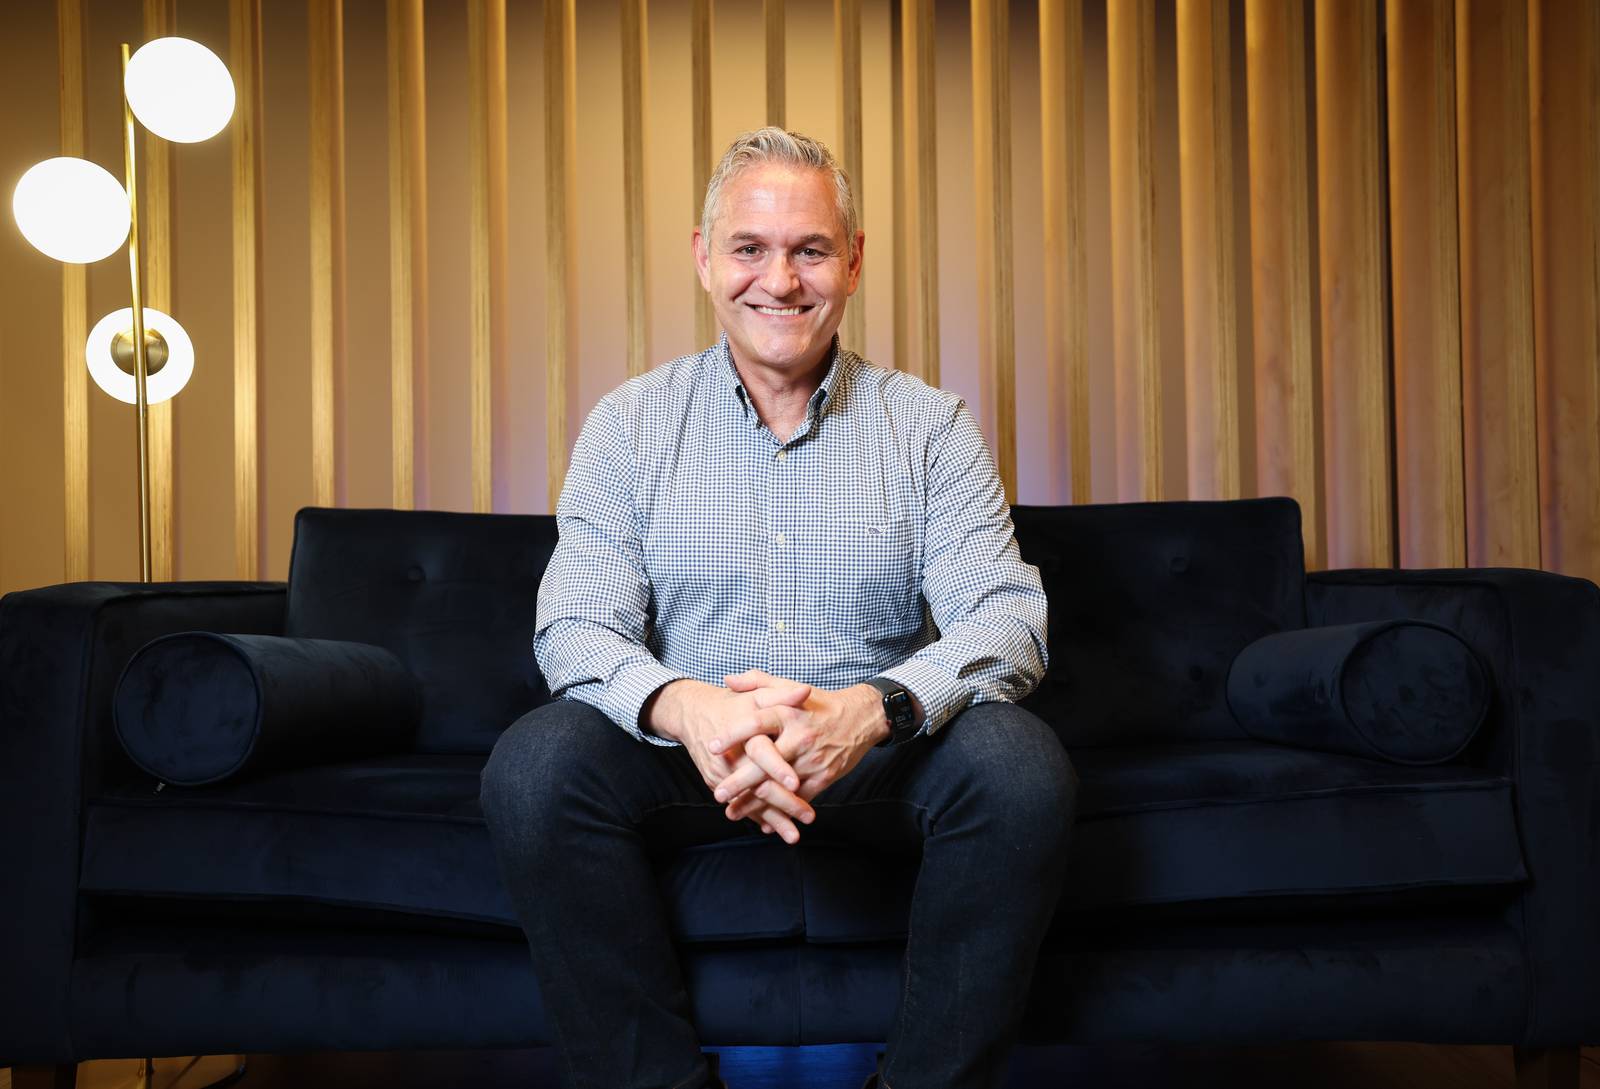 Cloudsmith chief executive Glenn Weinstein, smiling while sitting on a dark sofa.